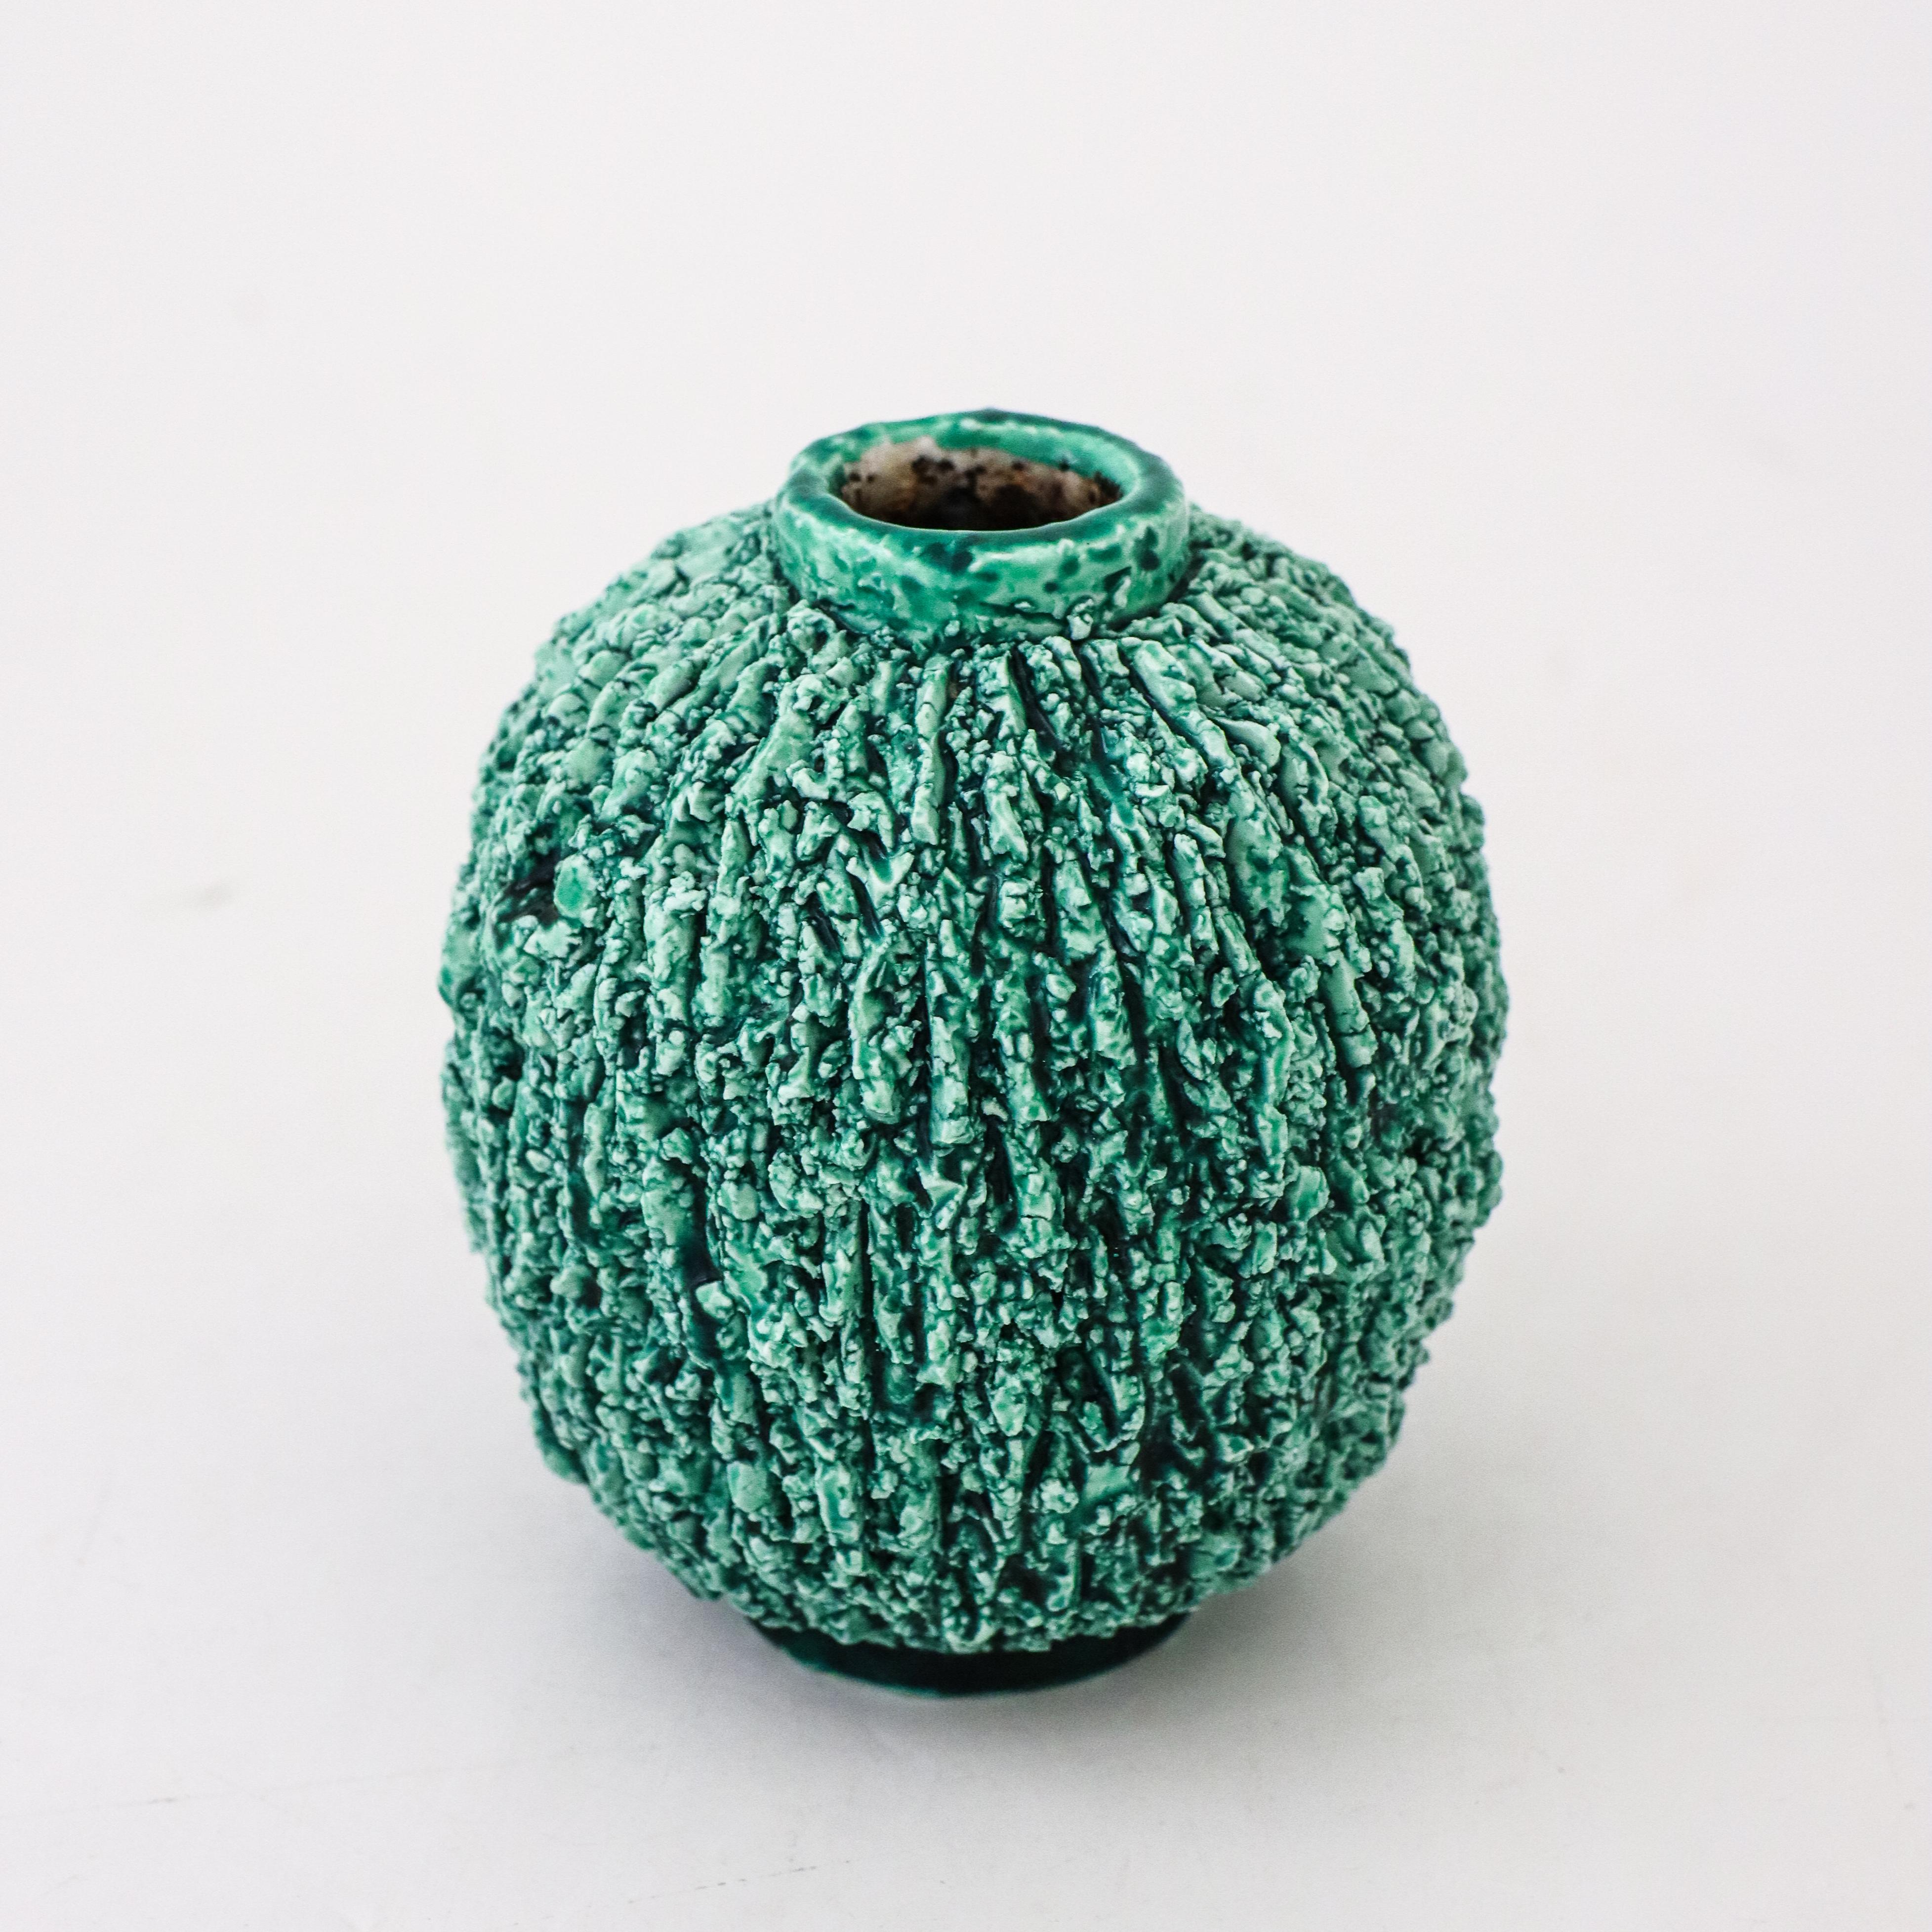 Swedish A Green Hedgehog vase - Chamotte - Gunnar Nylund - Rörstrand For Sale